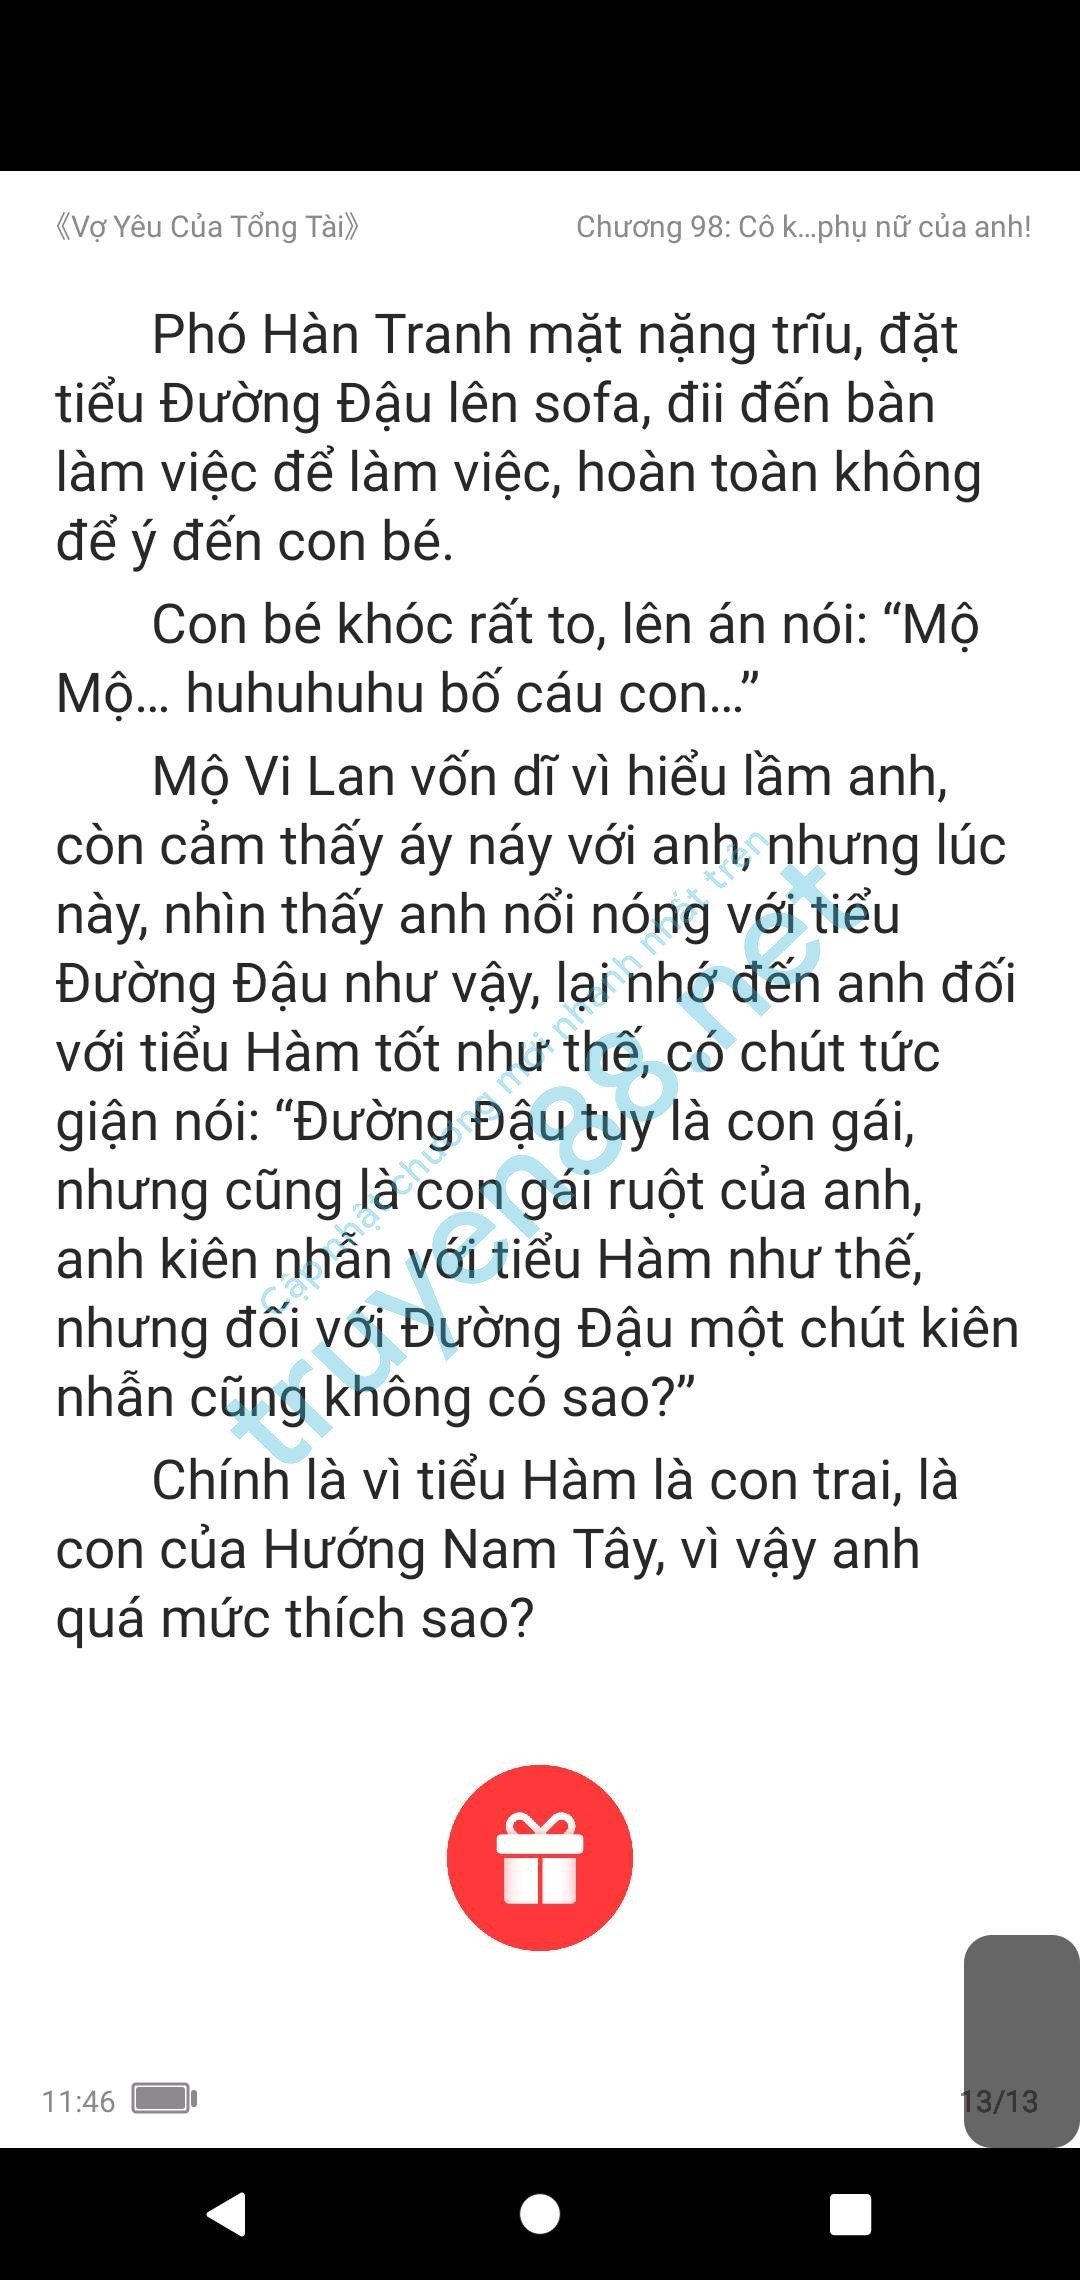 vo-yeu-cua-tong-tai-mo-vi-lan--pho-han-tranh-98-2